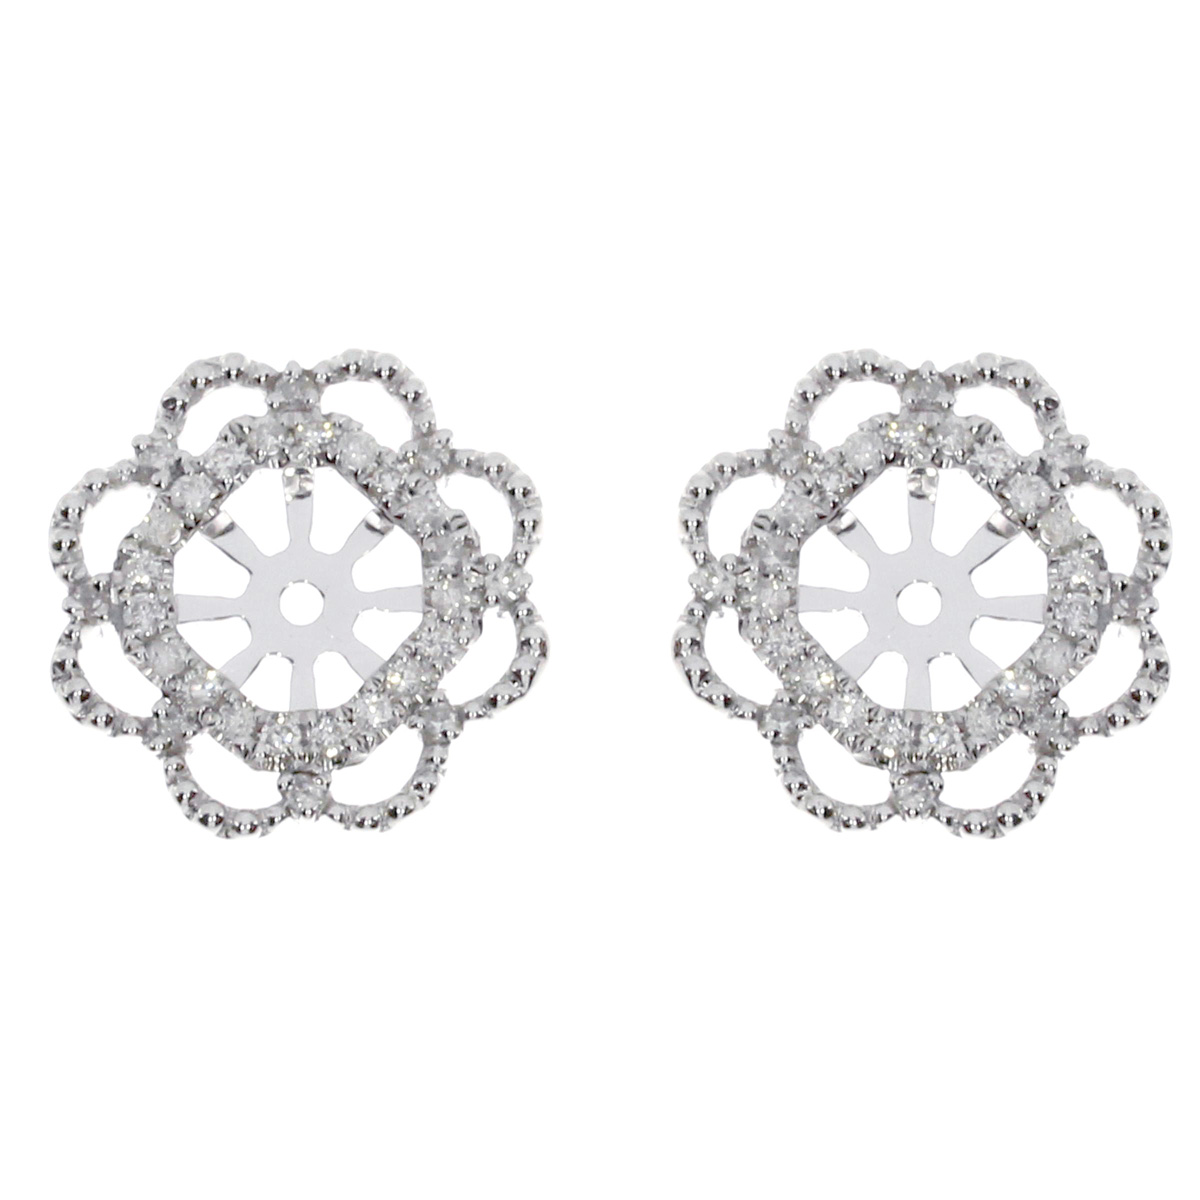 .28 total ct diamond flower-shaped earring jackets set in 14k white gold.